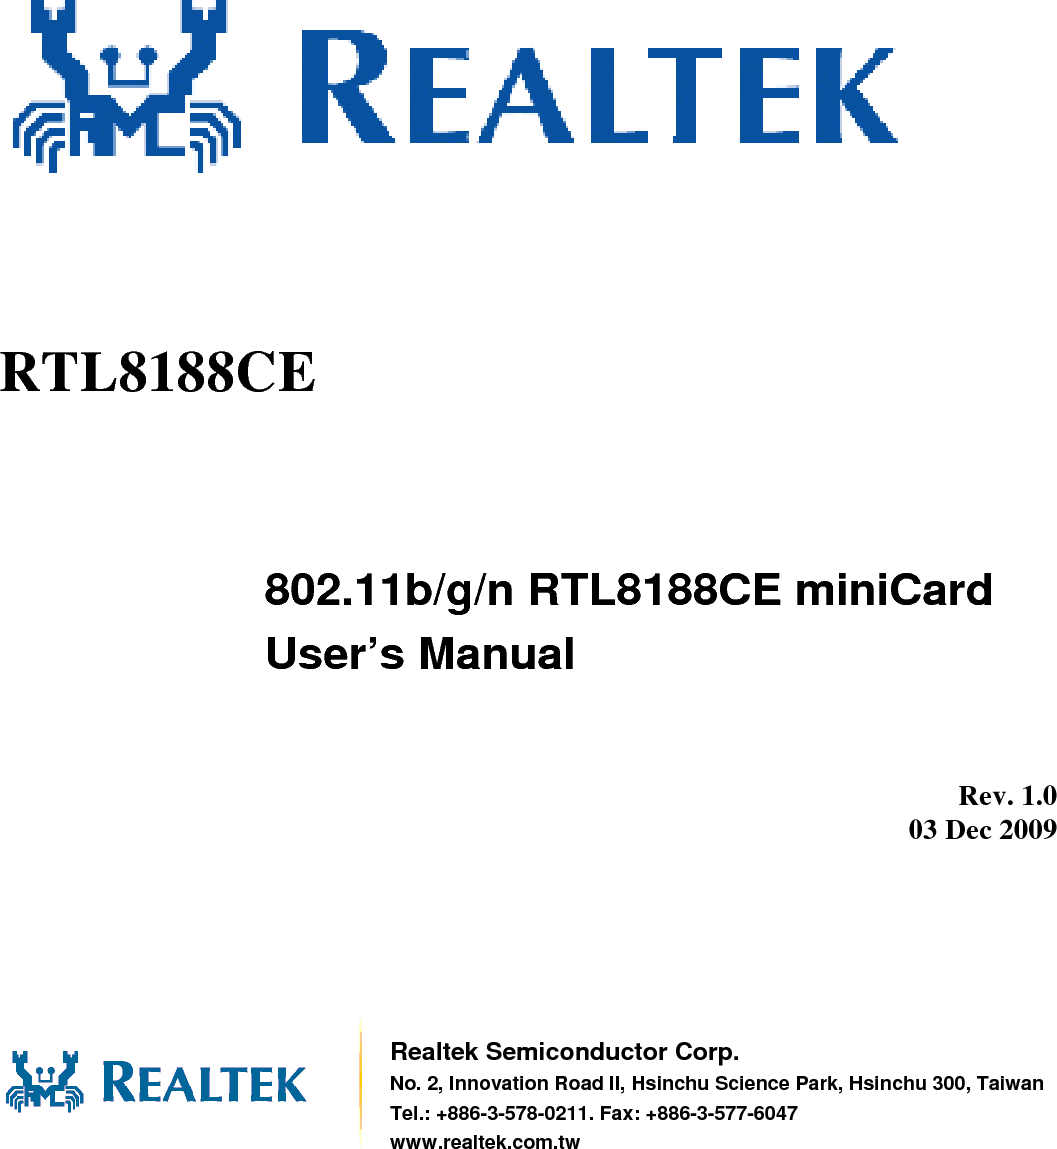           RTL8188CE       802.11b/g/n RTL8188CE miniCard User’s Manual          Rev. 1.0 03 Dec 2009        Realtek Semiconductor Corp. No. 2, Innovation Road II, Hsinchu Science Park, Hsinchu 300, TaiwanTel.: +886-3-578-0211. Fax: +886-3-577-6047 www.realtek.com.tw 